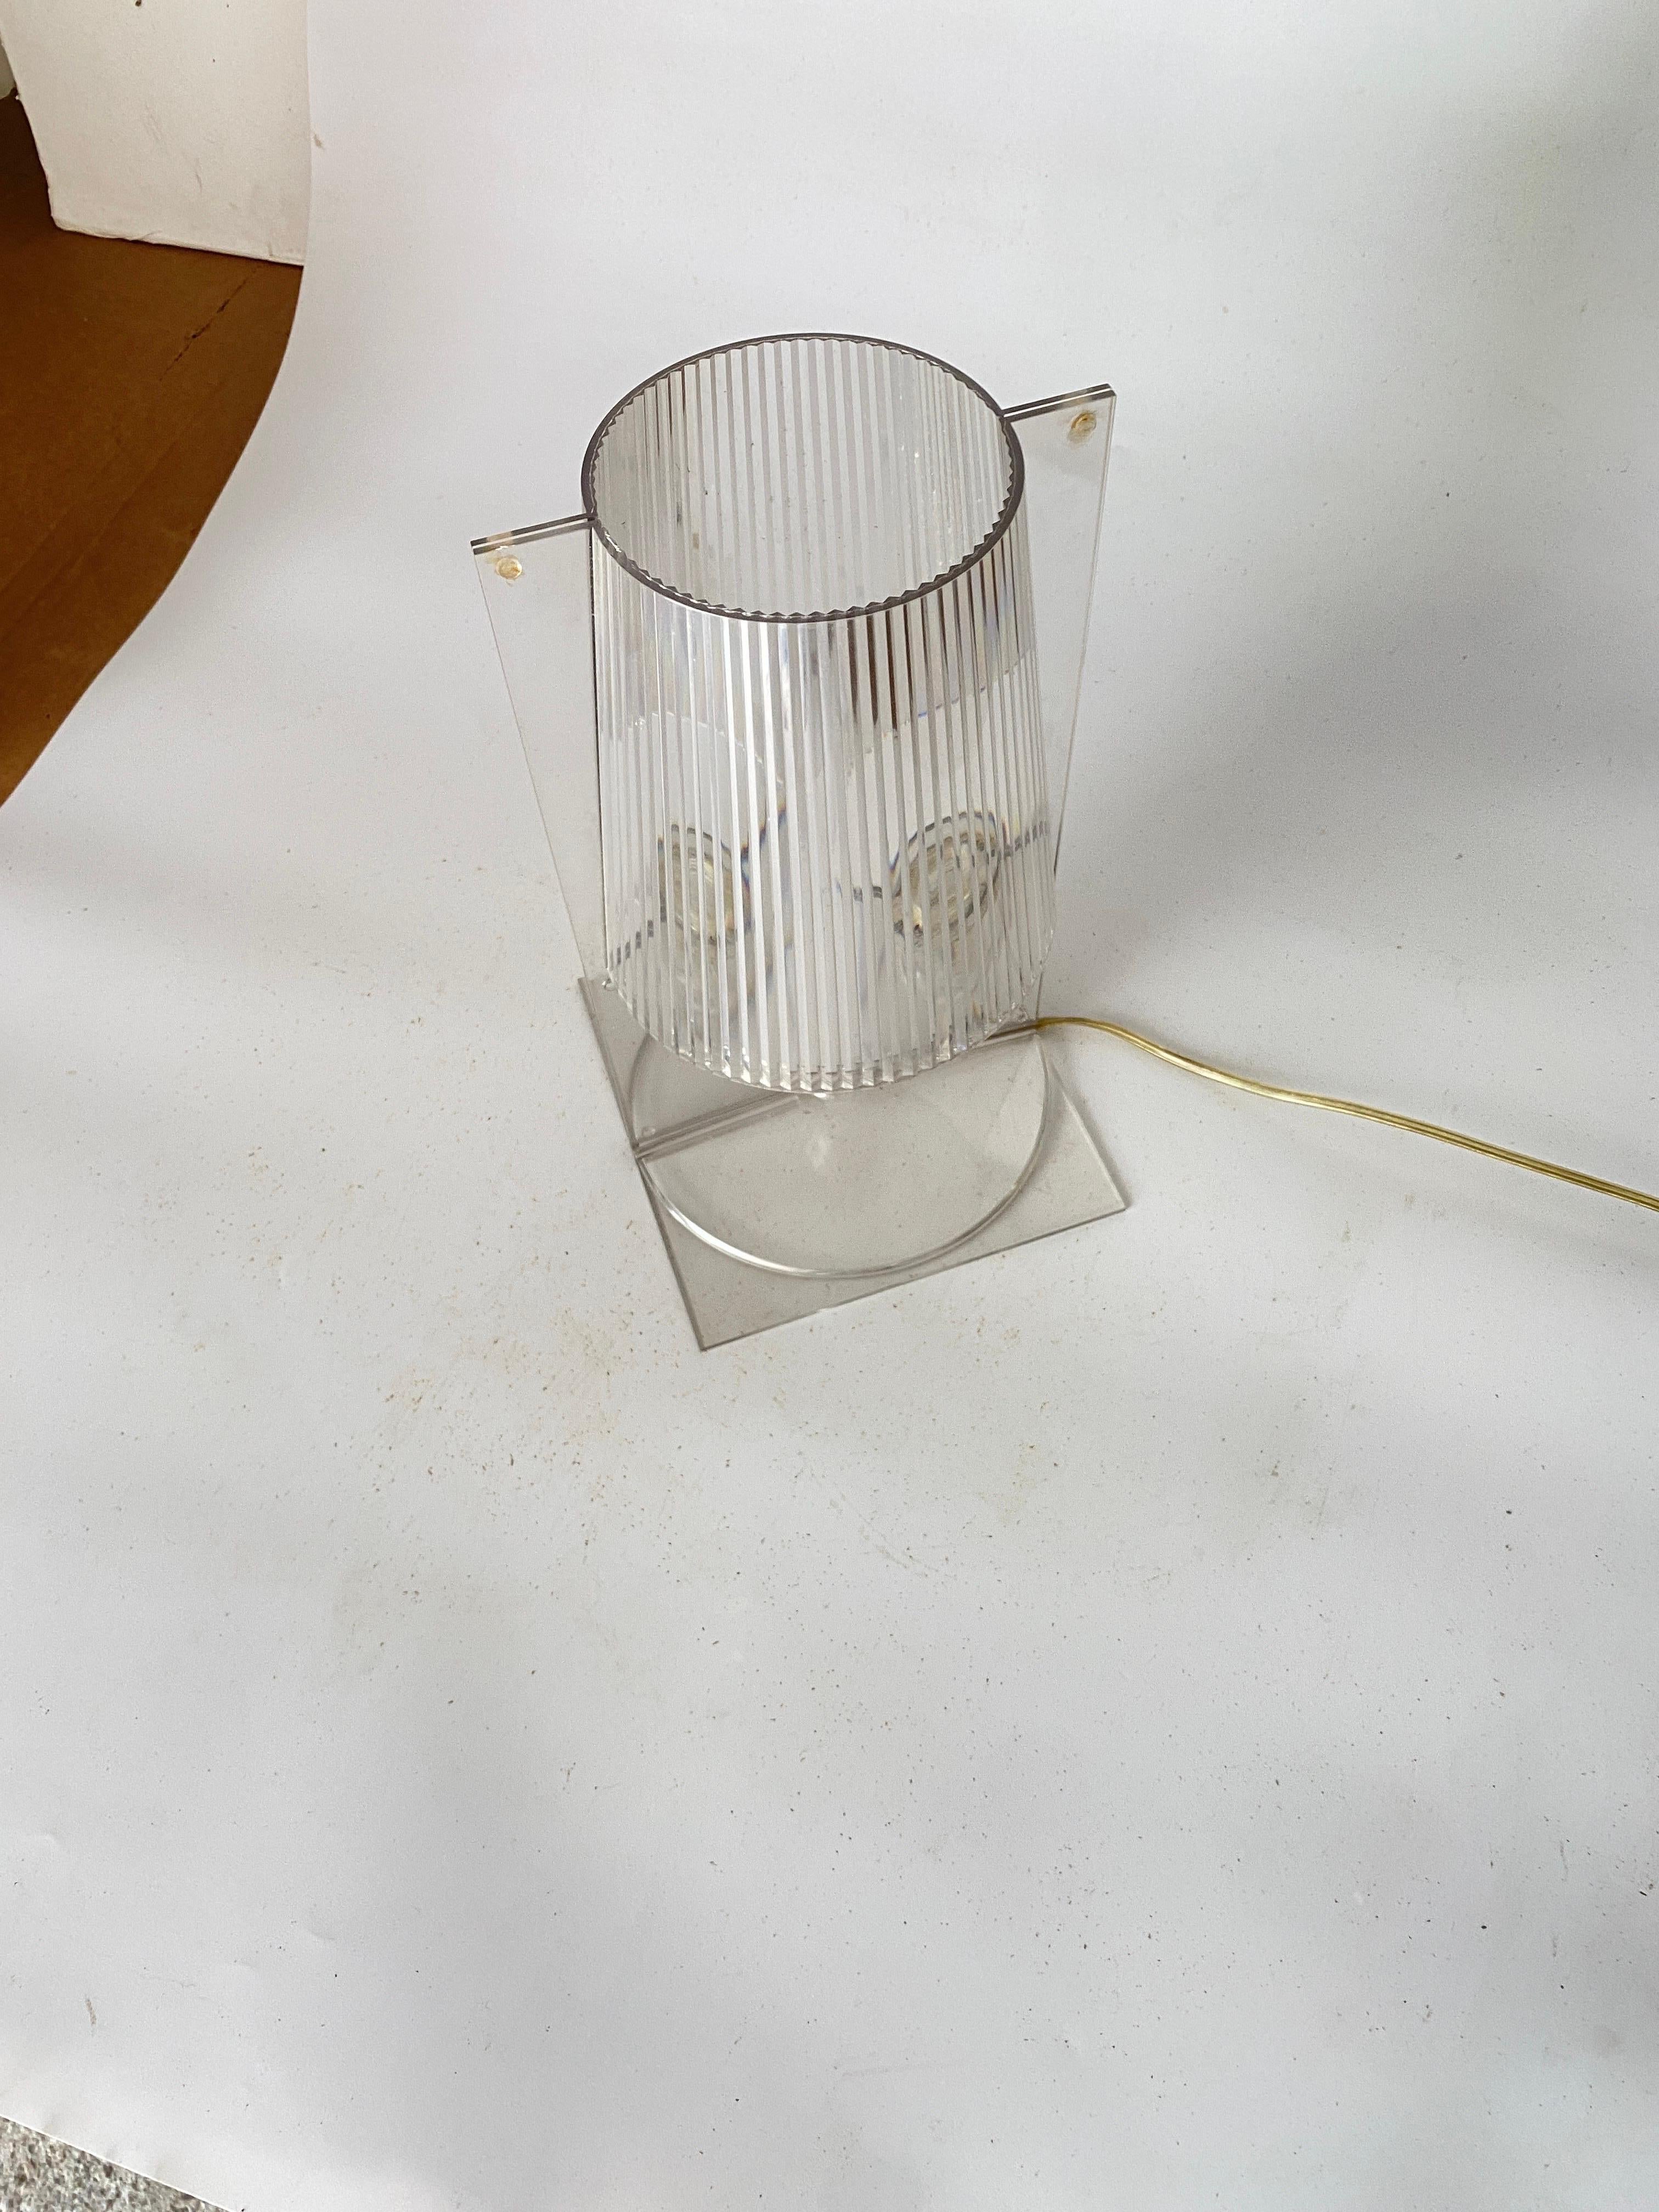  Kartell Take Lamp in Crystal by Ferruccio Laviani, Italian 21 Century For Sale 1